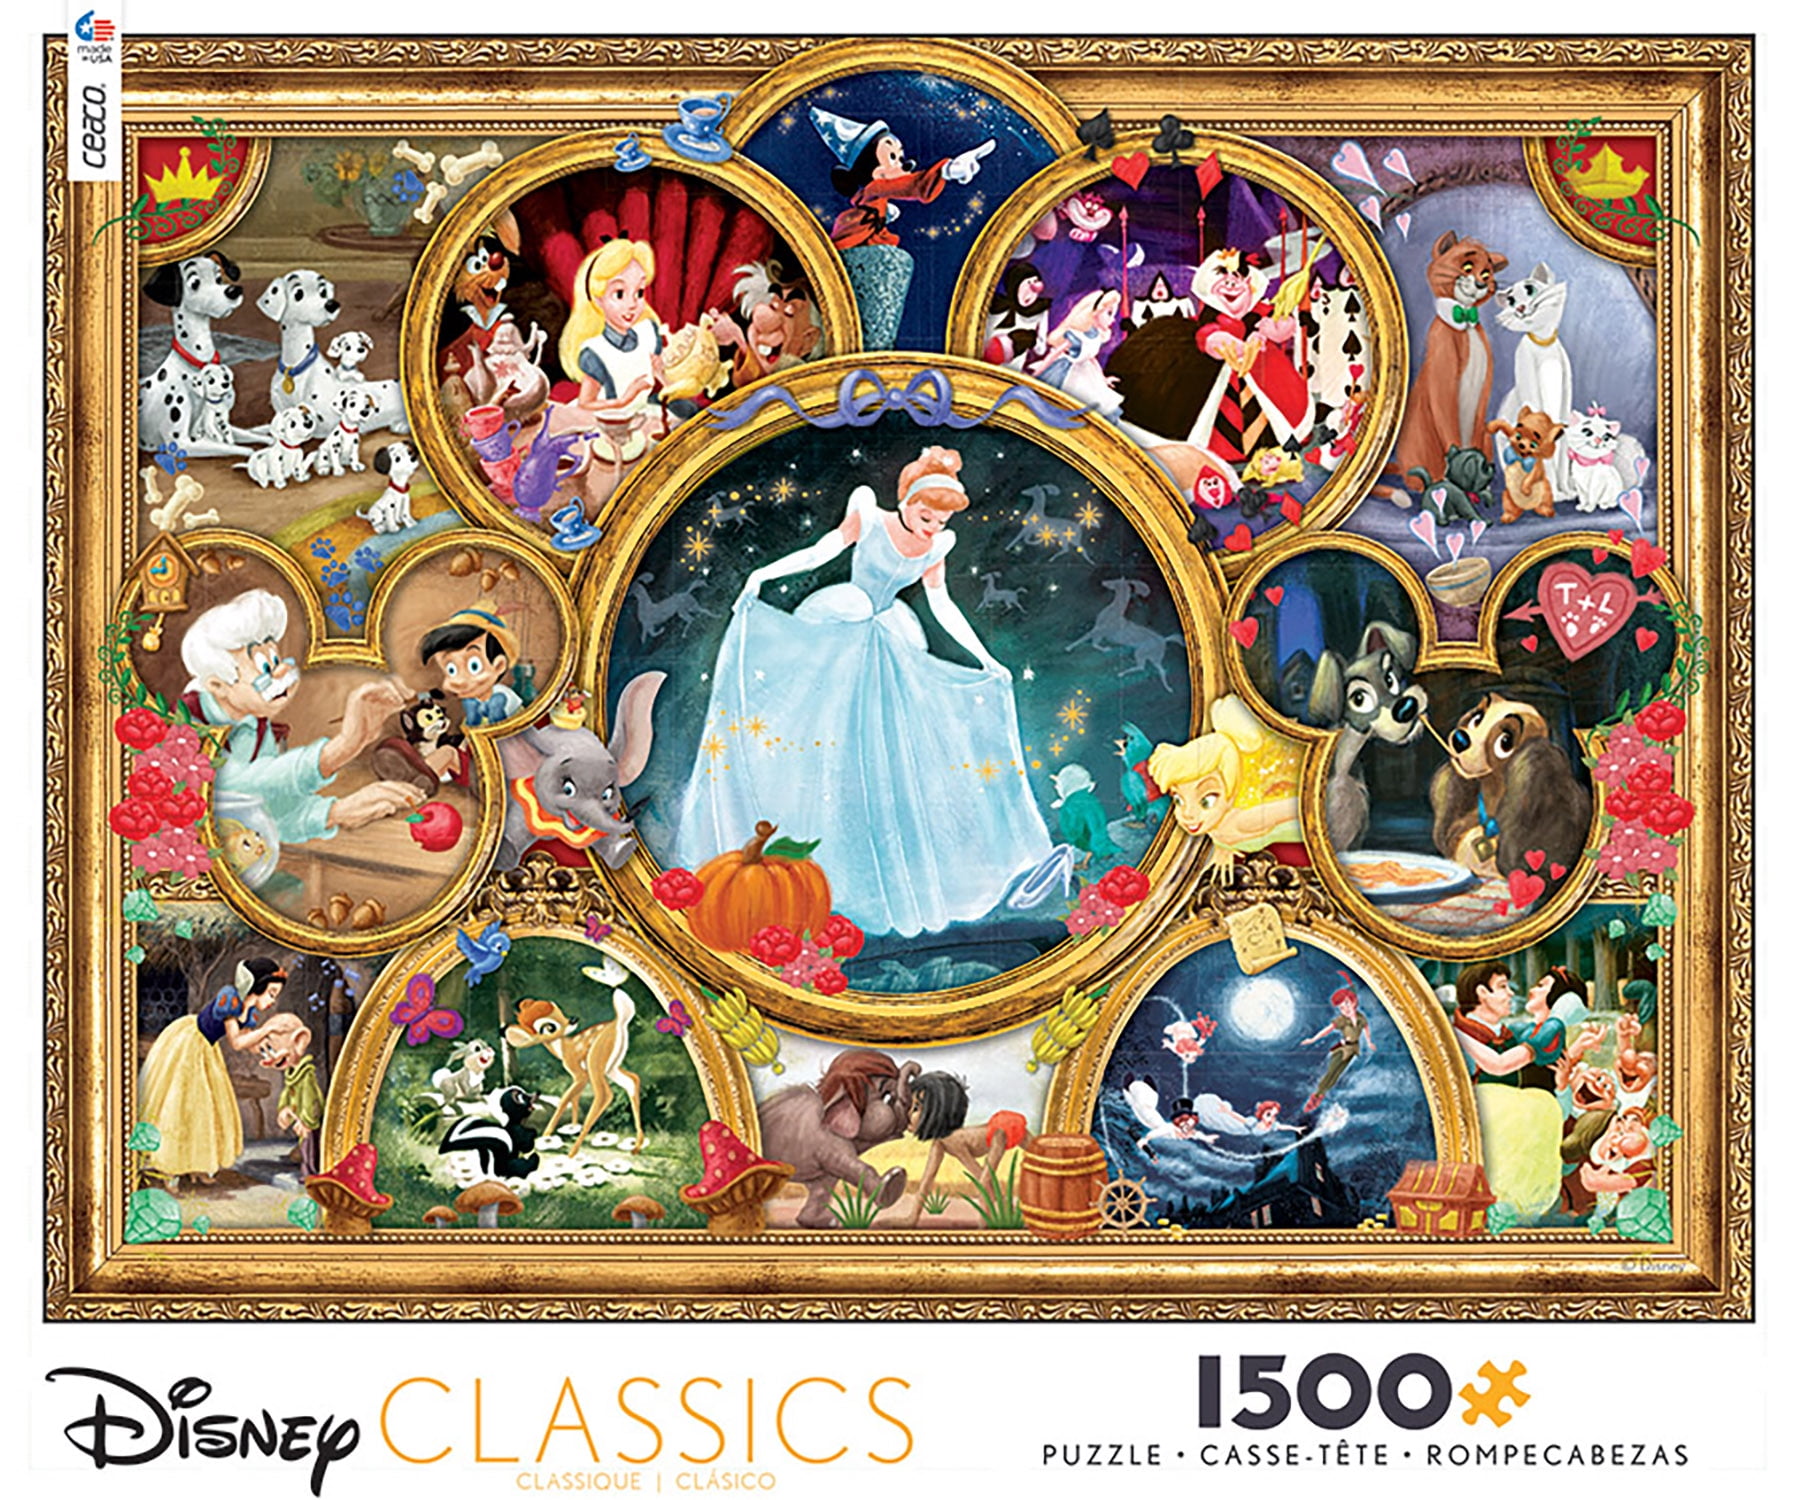 Ceaco Disney Classics II 1500 PC Puzzle 2019 for sale online 